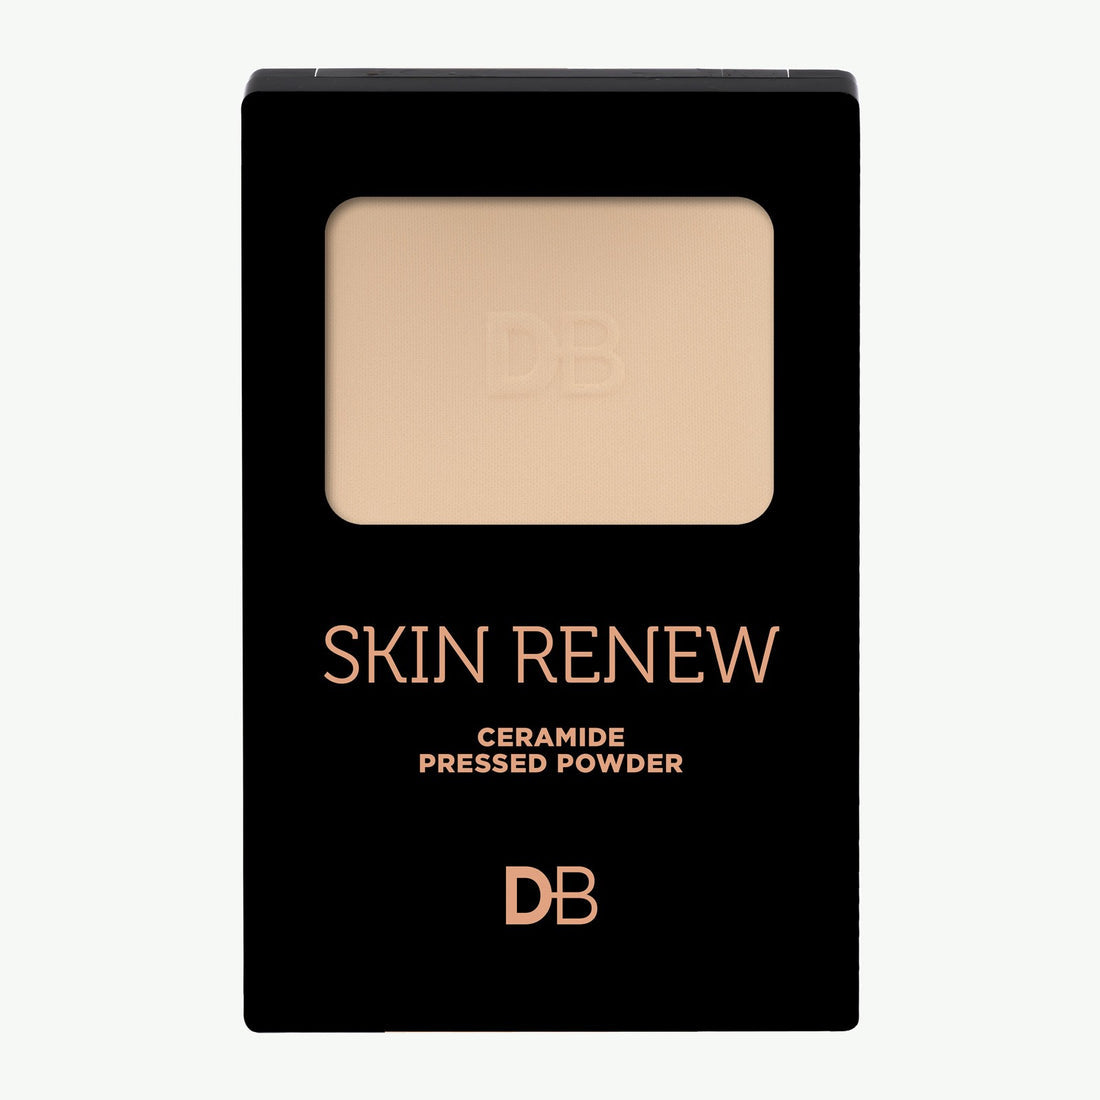 DB Skin Renew Ceramide Pressed Powder